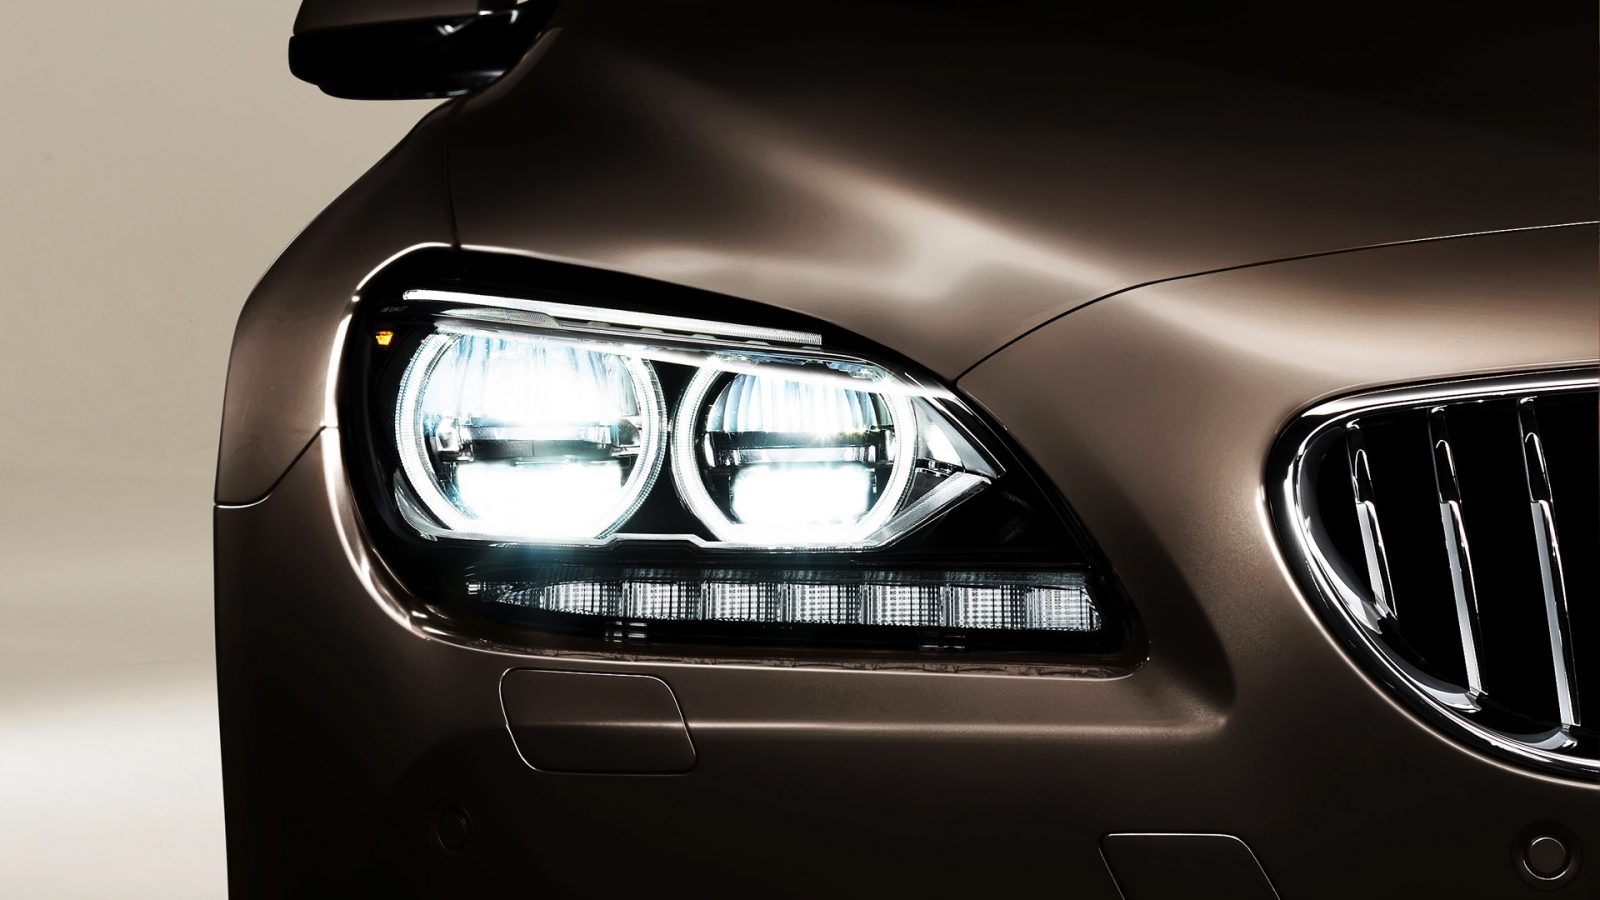 BMW 6 Series 2013 Headlight for 1600 x 900 HDTV resolution